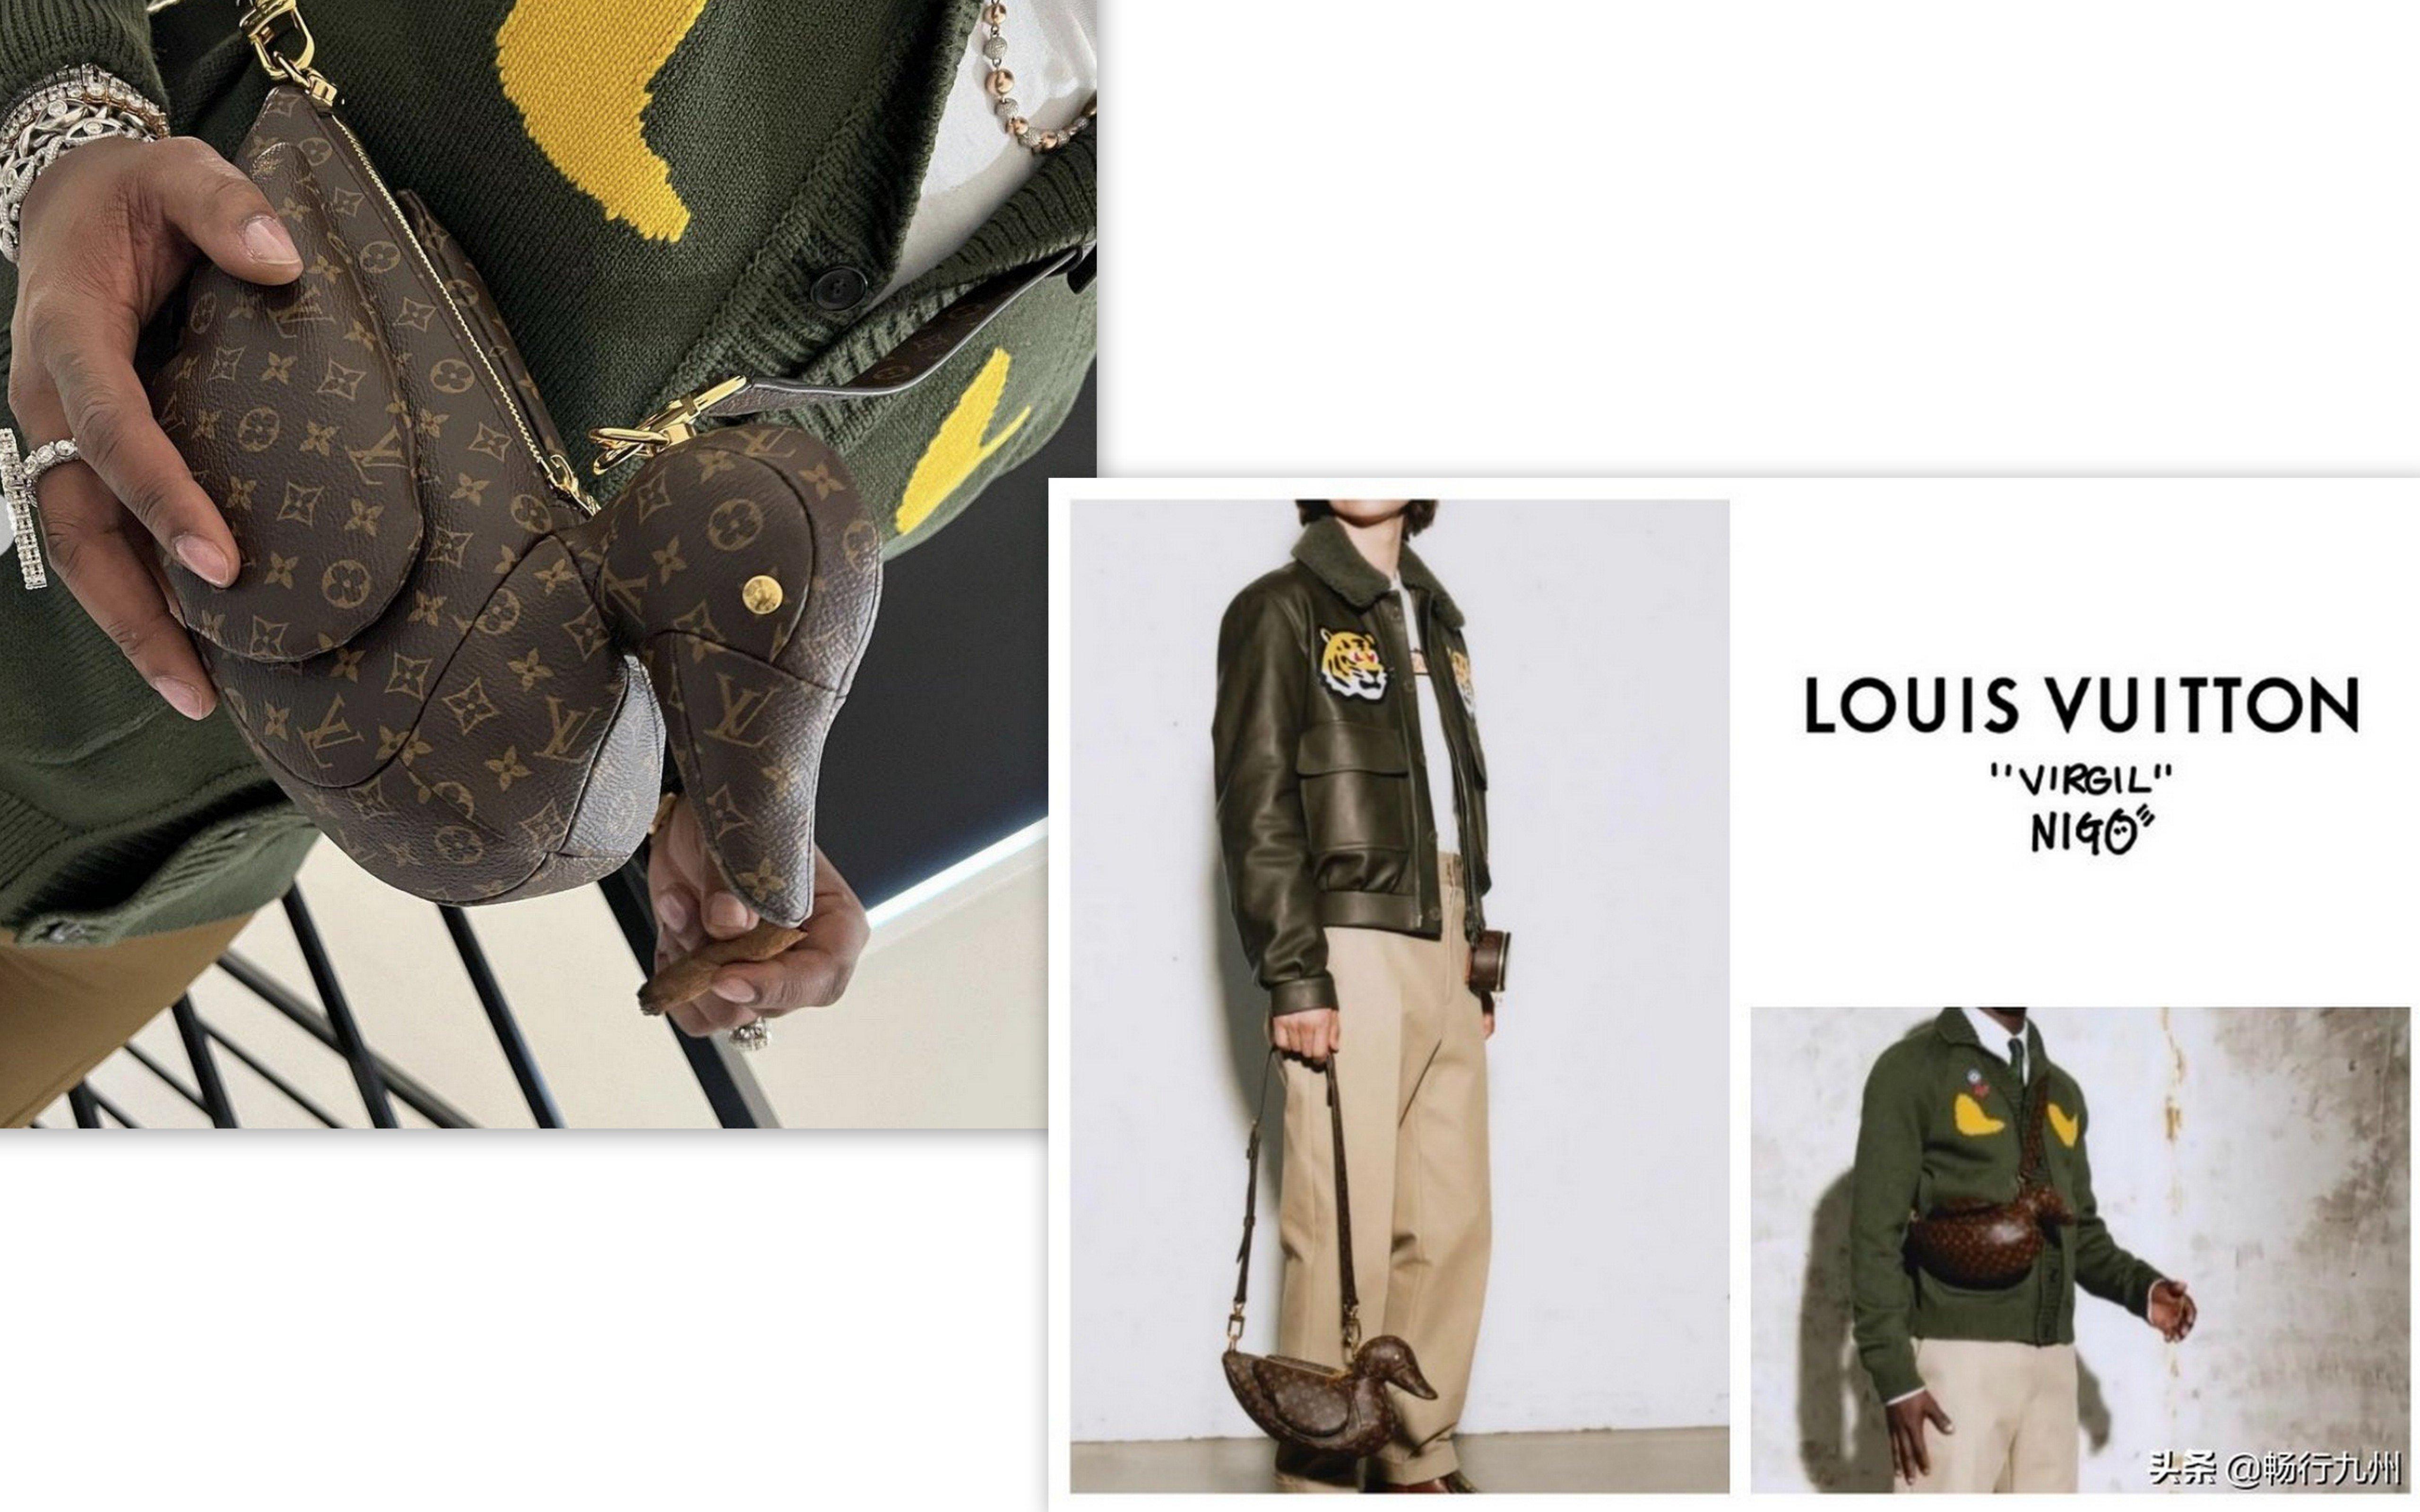 RARE Limited Edition Louis Vuitton X NIGO Virgil Abloh Monogram Duck Bag  NEW 1